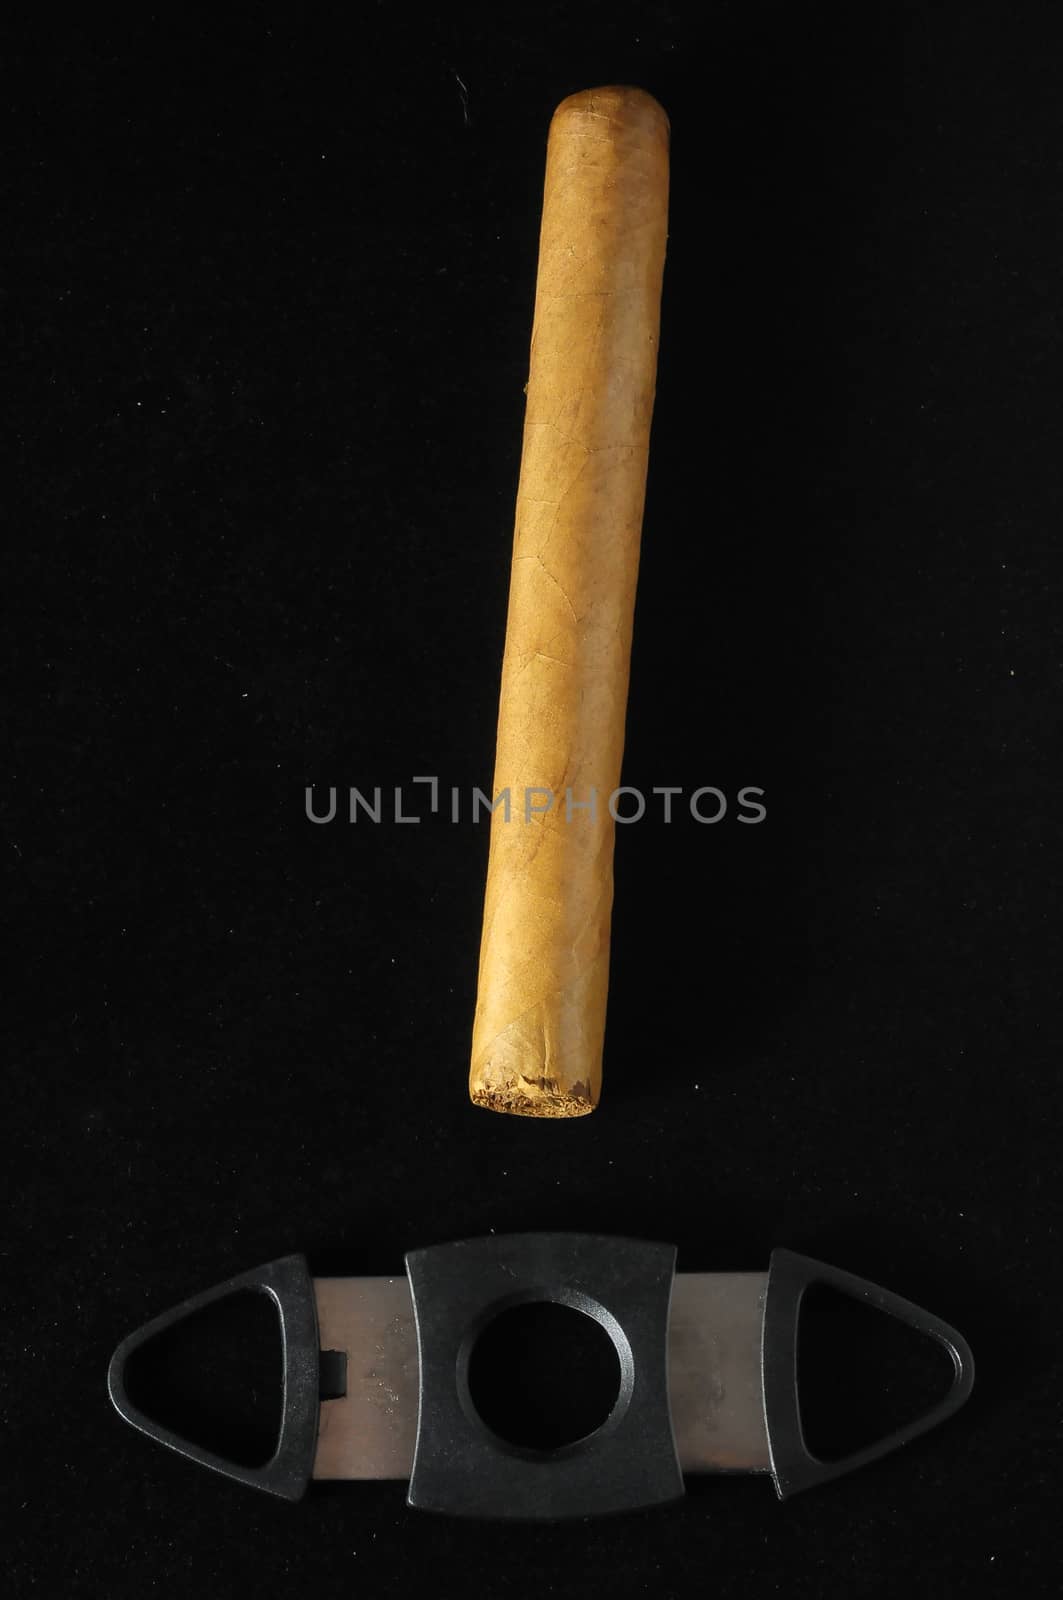 Cuban Brown Havan Cigar and Cutter on a black background